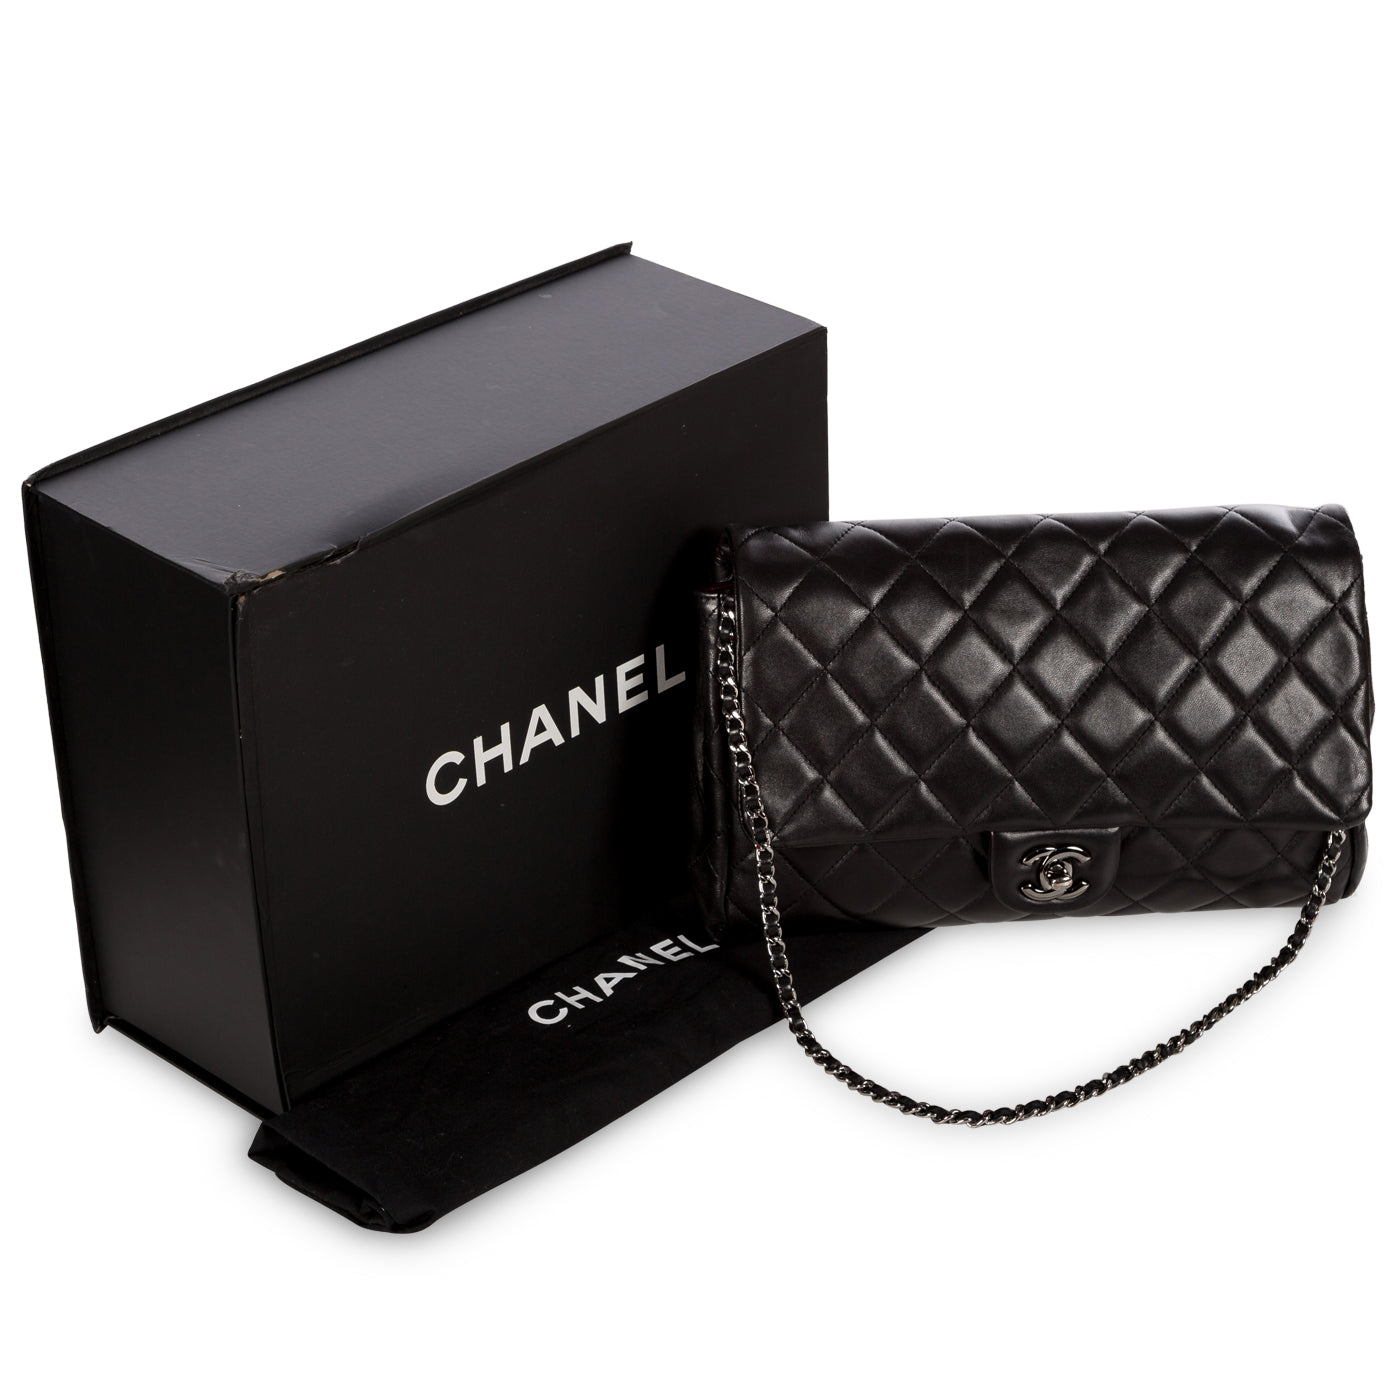 Chanel - Clutch with Chain - Black - RSHW